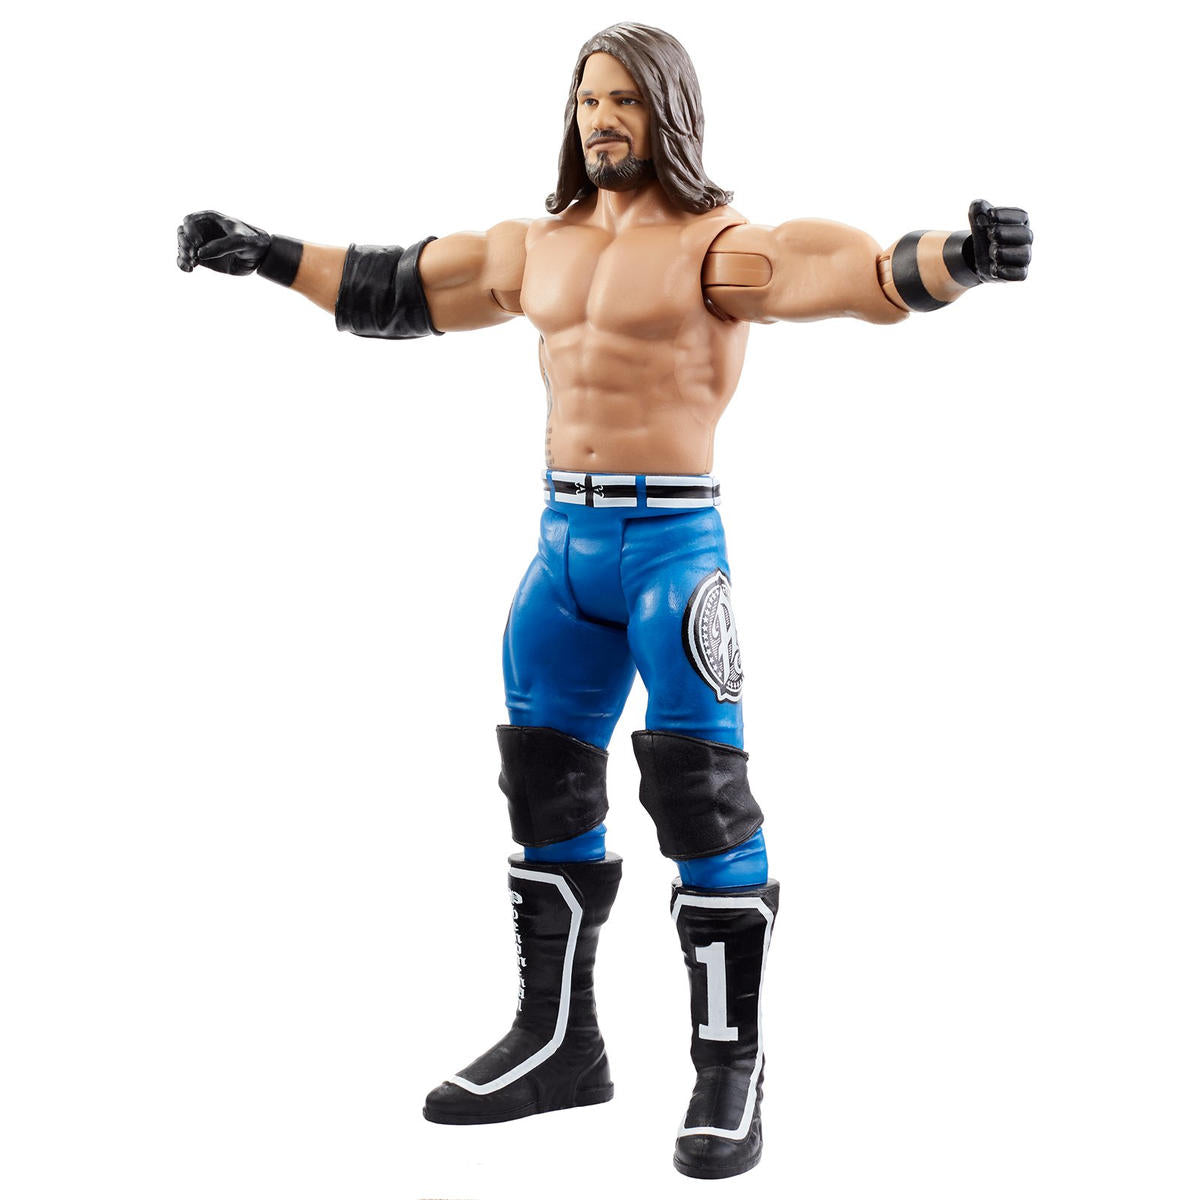 2019 WWE Mattel Basic Series 101 AJ Styles